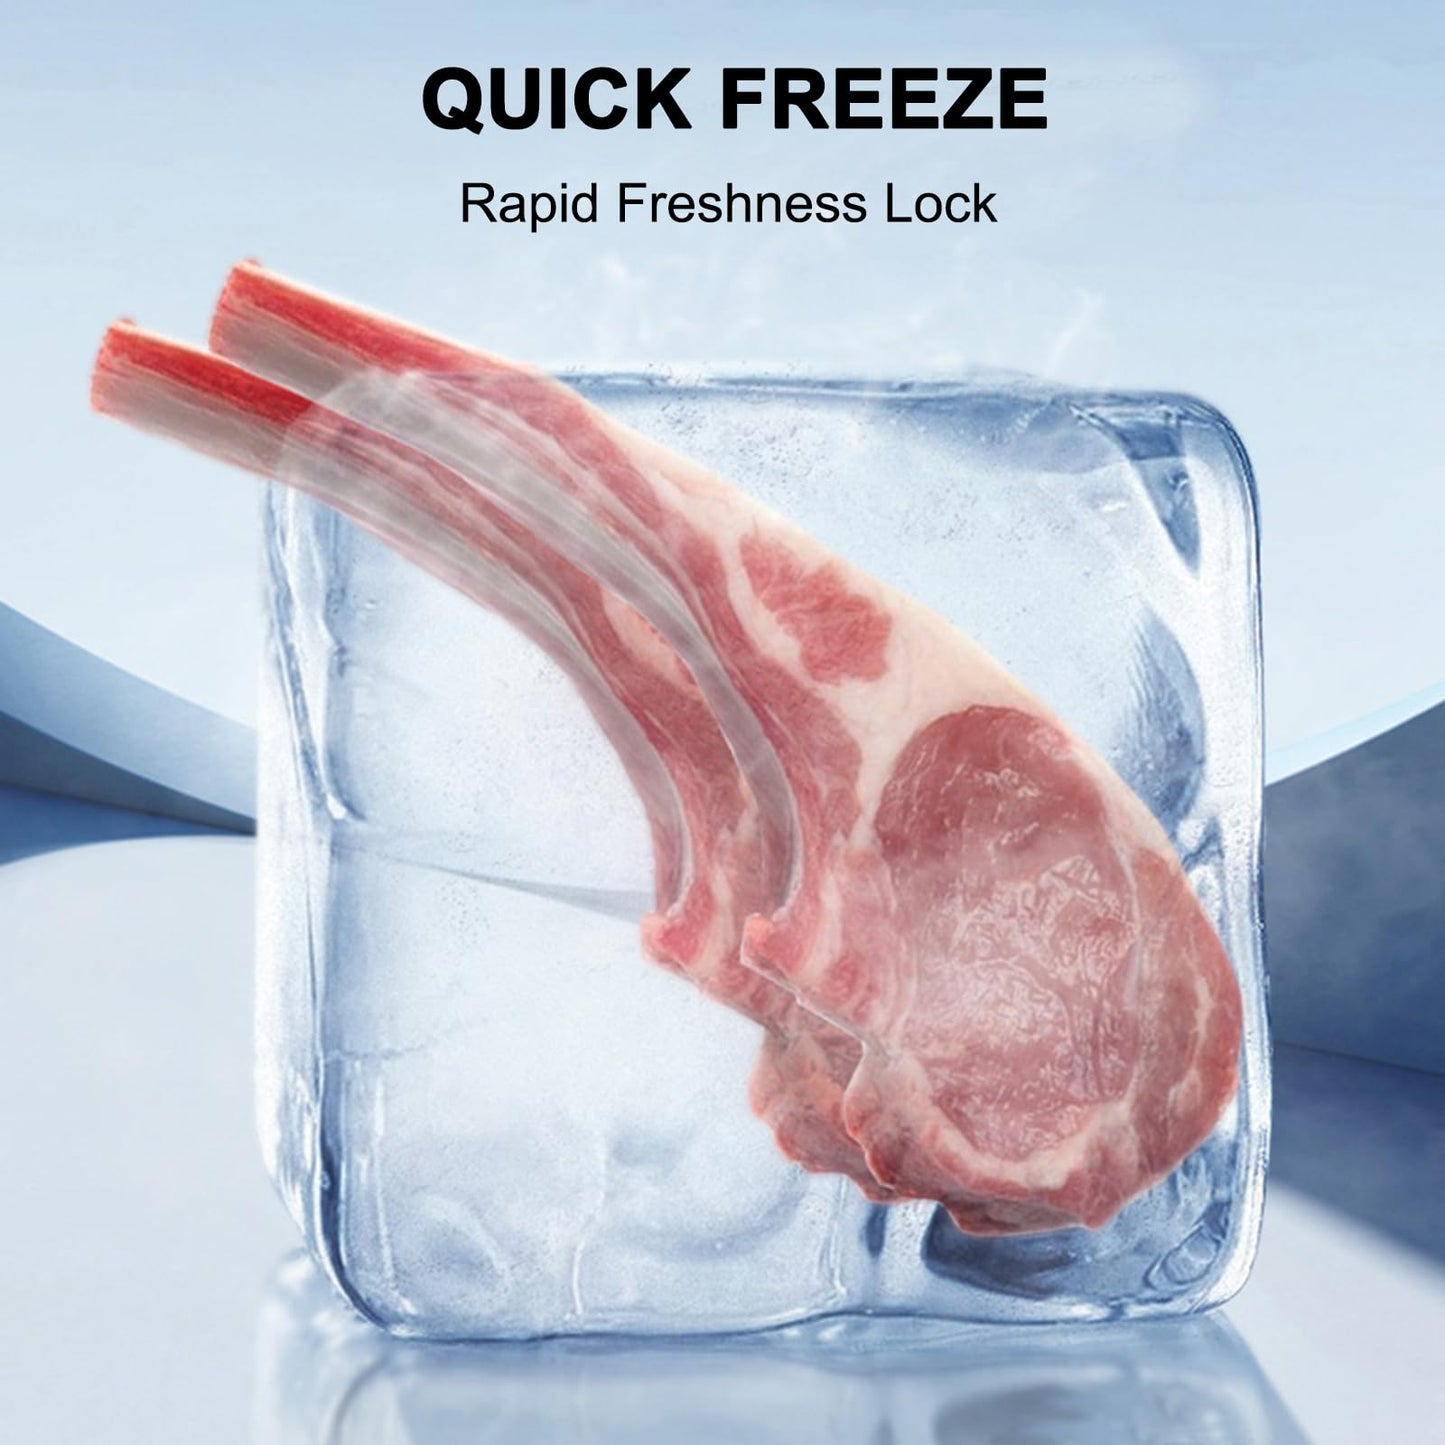 Upright Freezer, Stand Up Freezer,Freezer Upright 17 cu ft Upright Freezers Frost Free, Convertible Fridge/Freezer,Stainless Steel Standing Freezer Upright with LED Interior Light